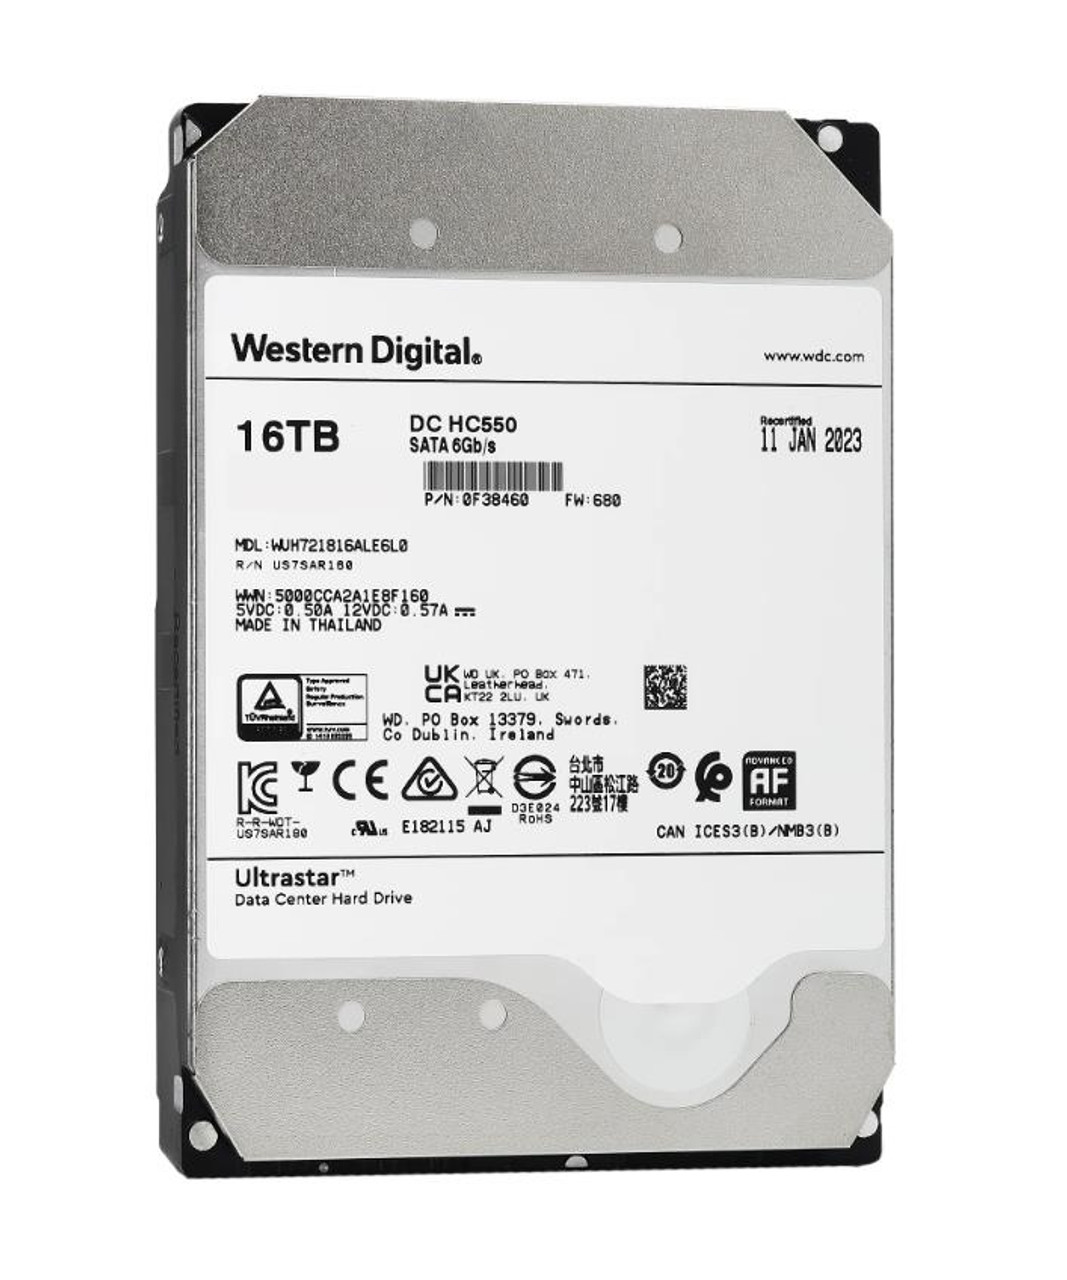 Western Digital Ultrastar Dc Hc550 Series 16TB 7200RPM SATA 6Gbps (512e) 512MB Cache 3.5-inch Hard Disk Drive